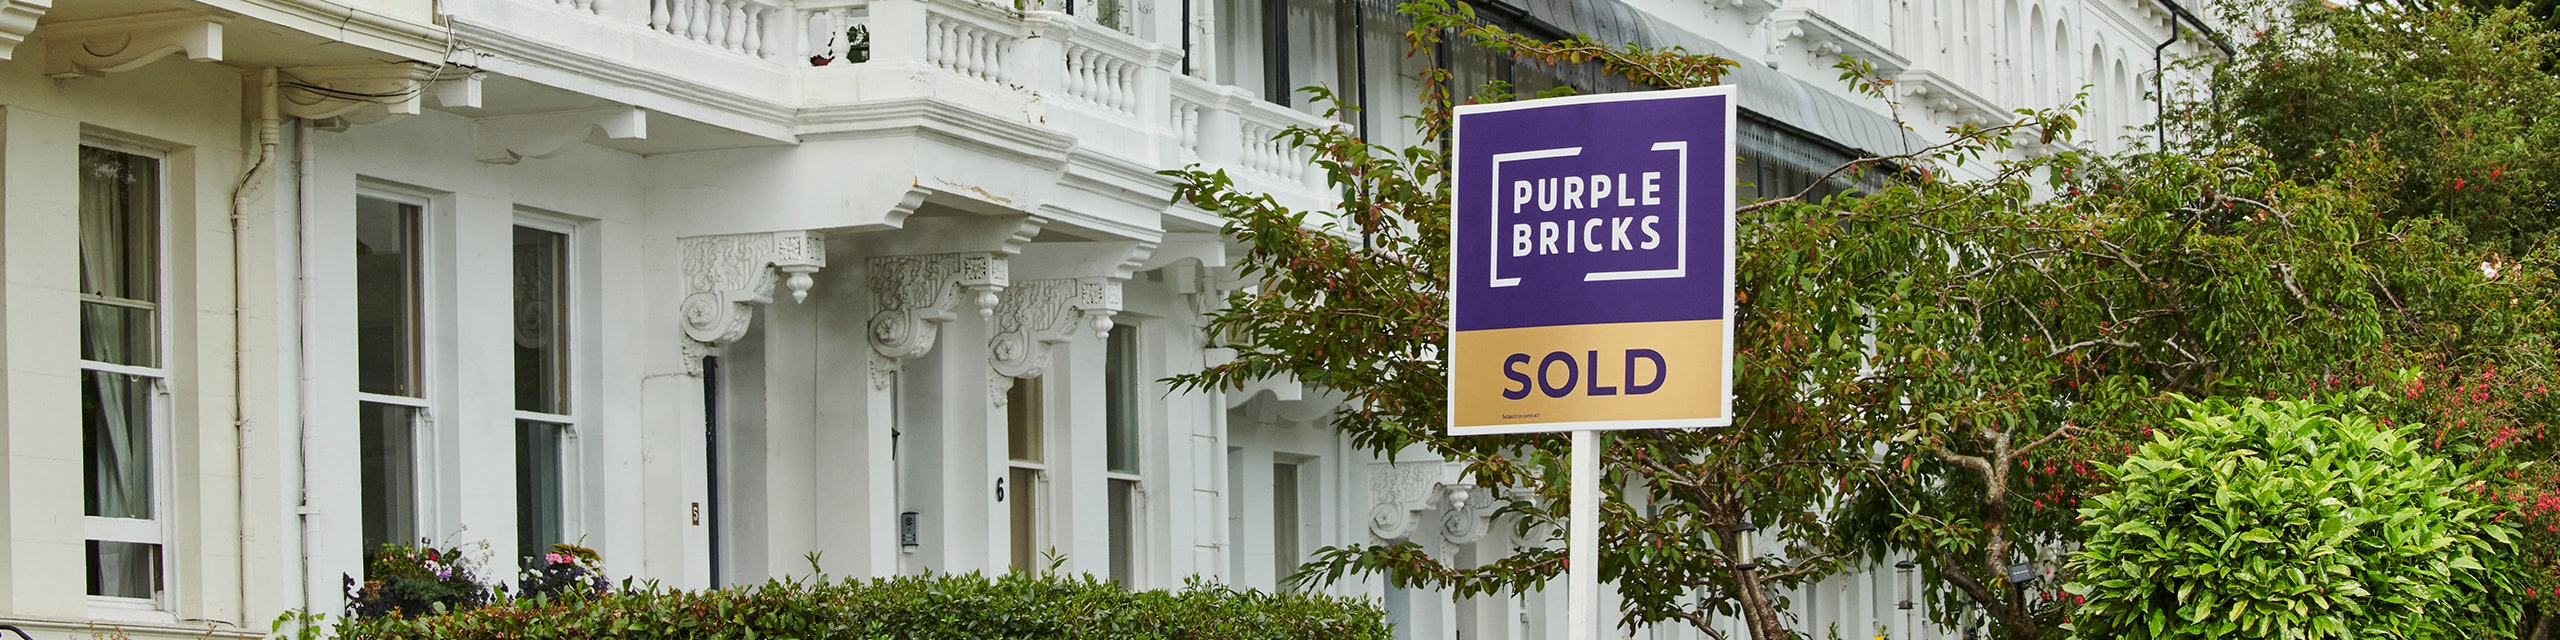  A Purplebricks sold board outside a house - Purplebricks estate agents